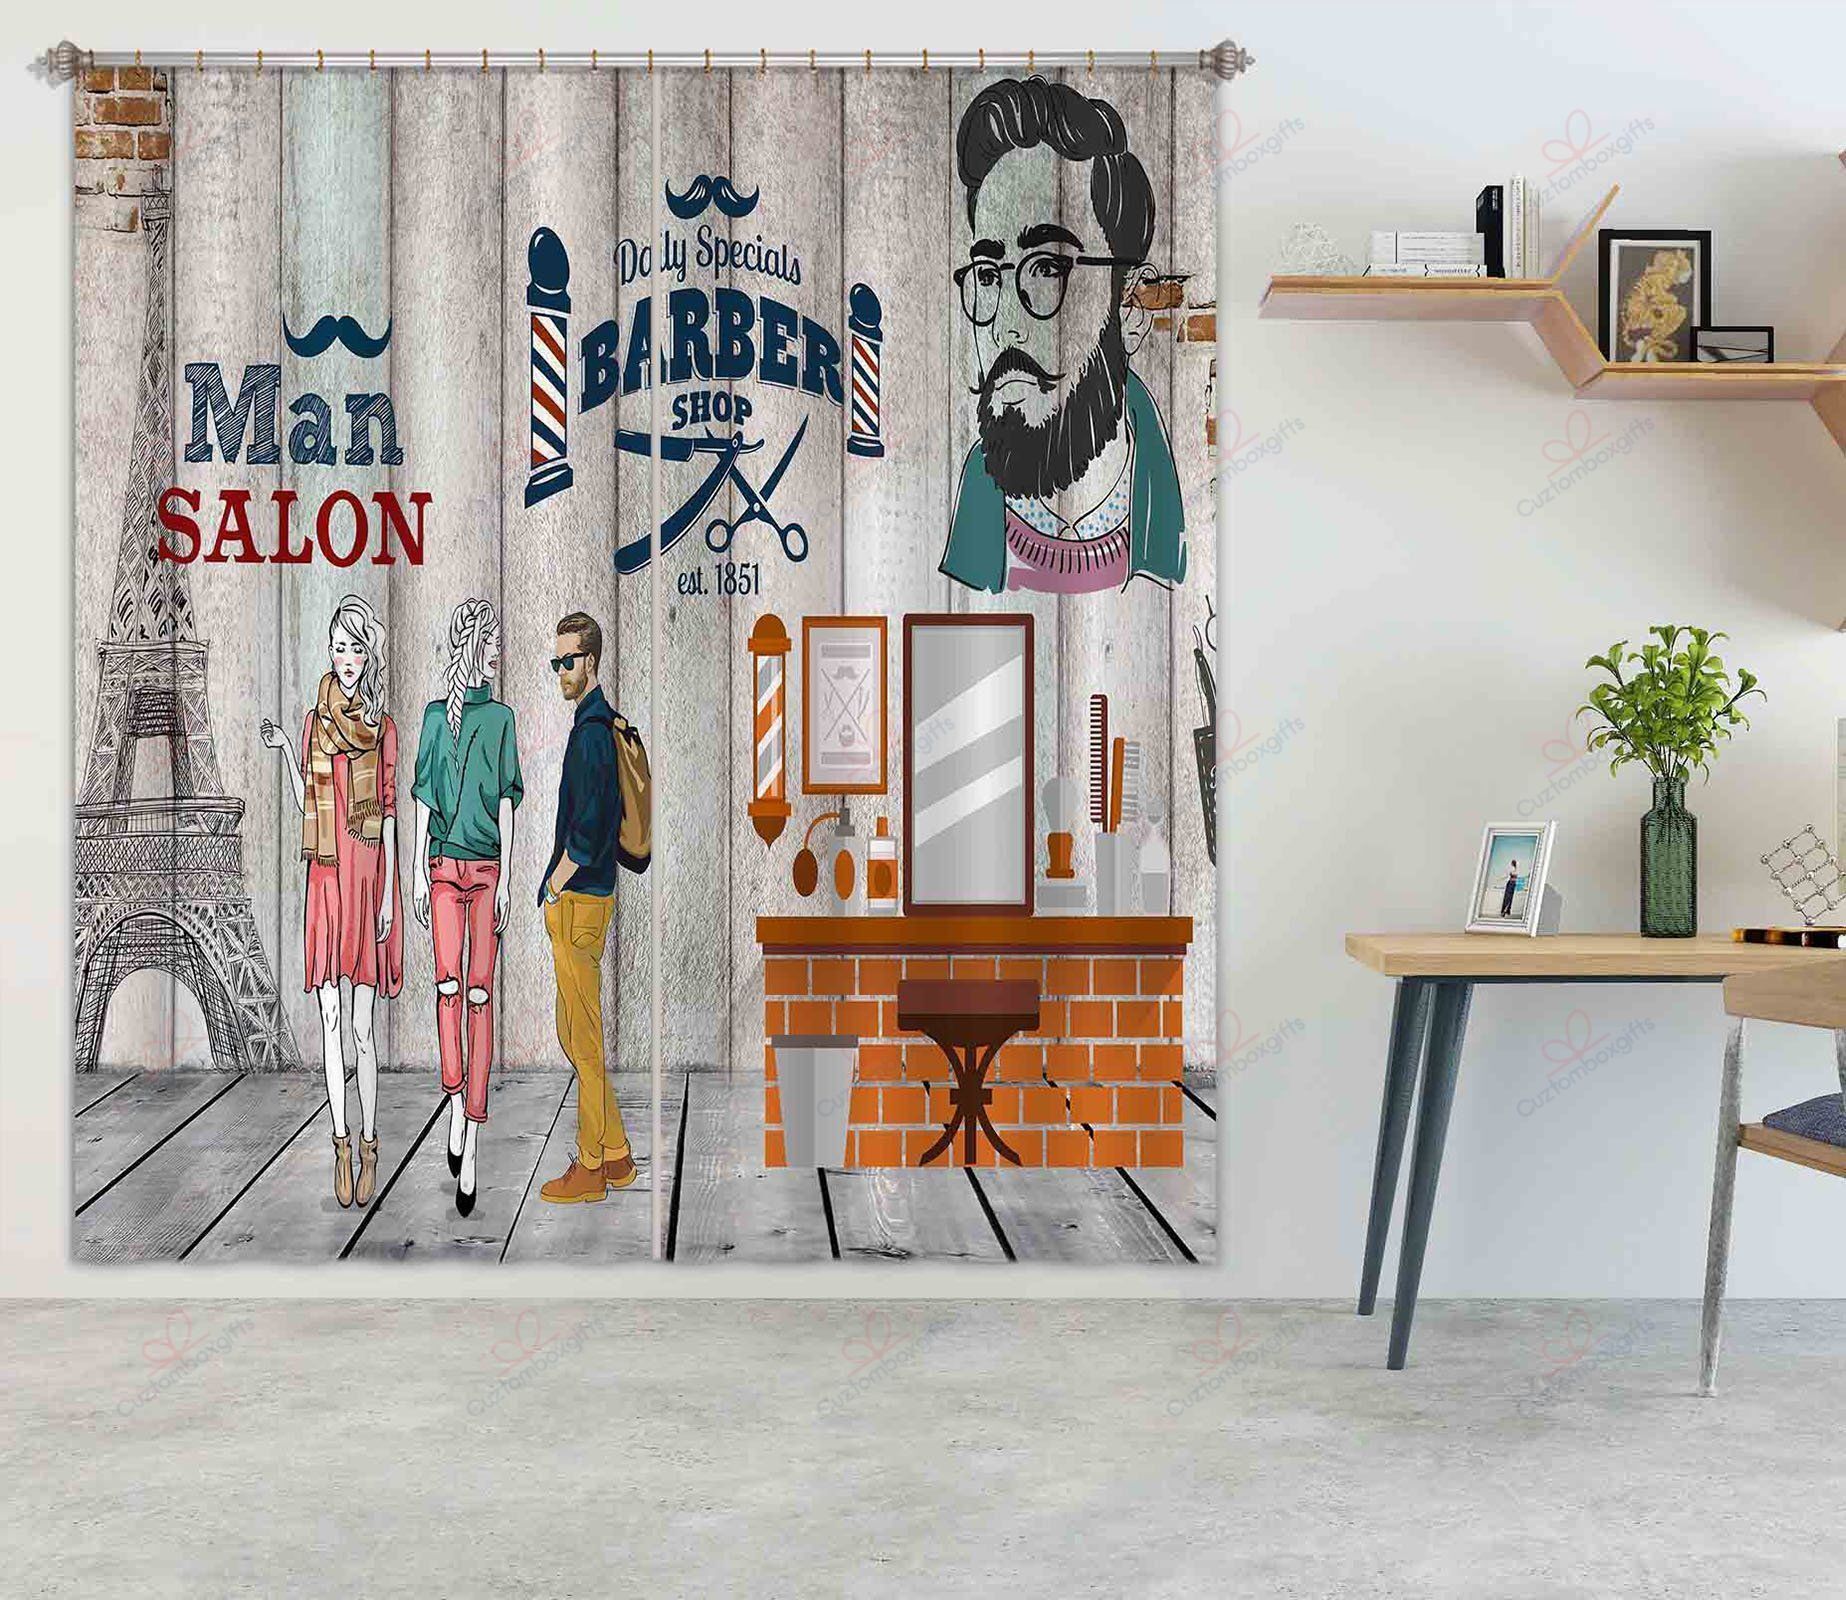 Barbershop Man Salon Printed Window Curtain Home Decor